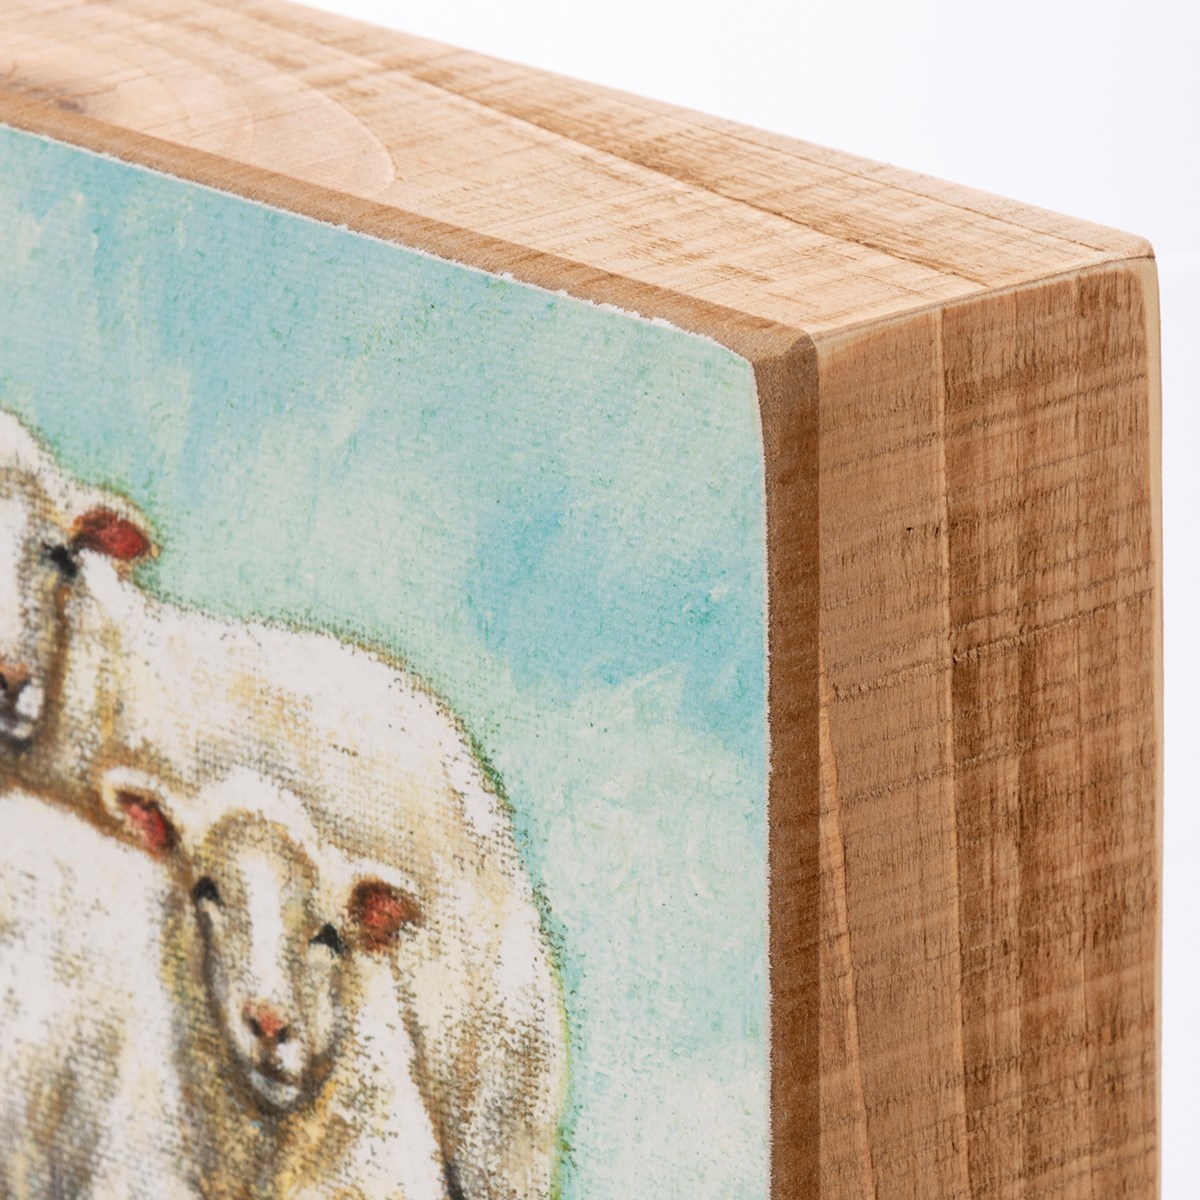 Sheep Duo Box Sign - Wood, Paper